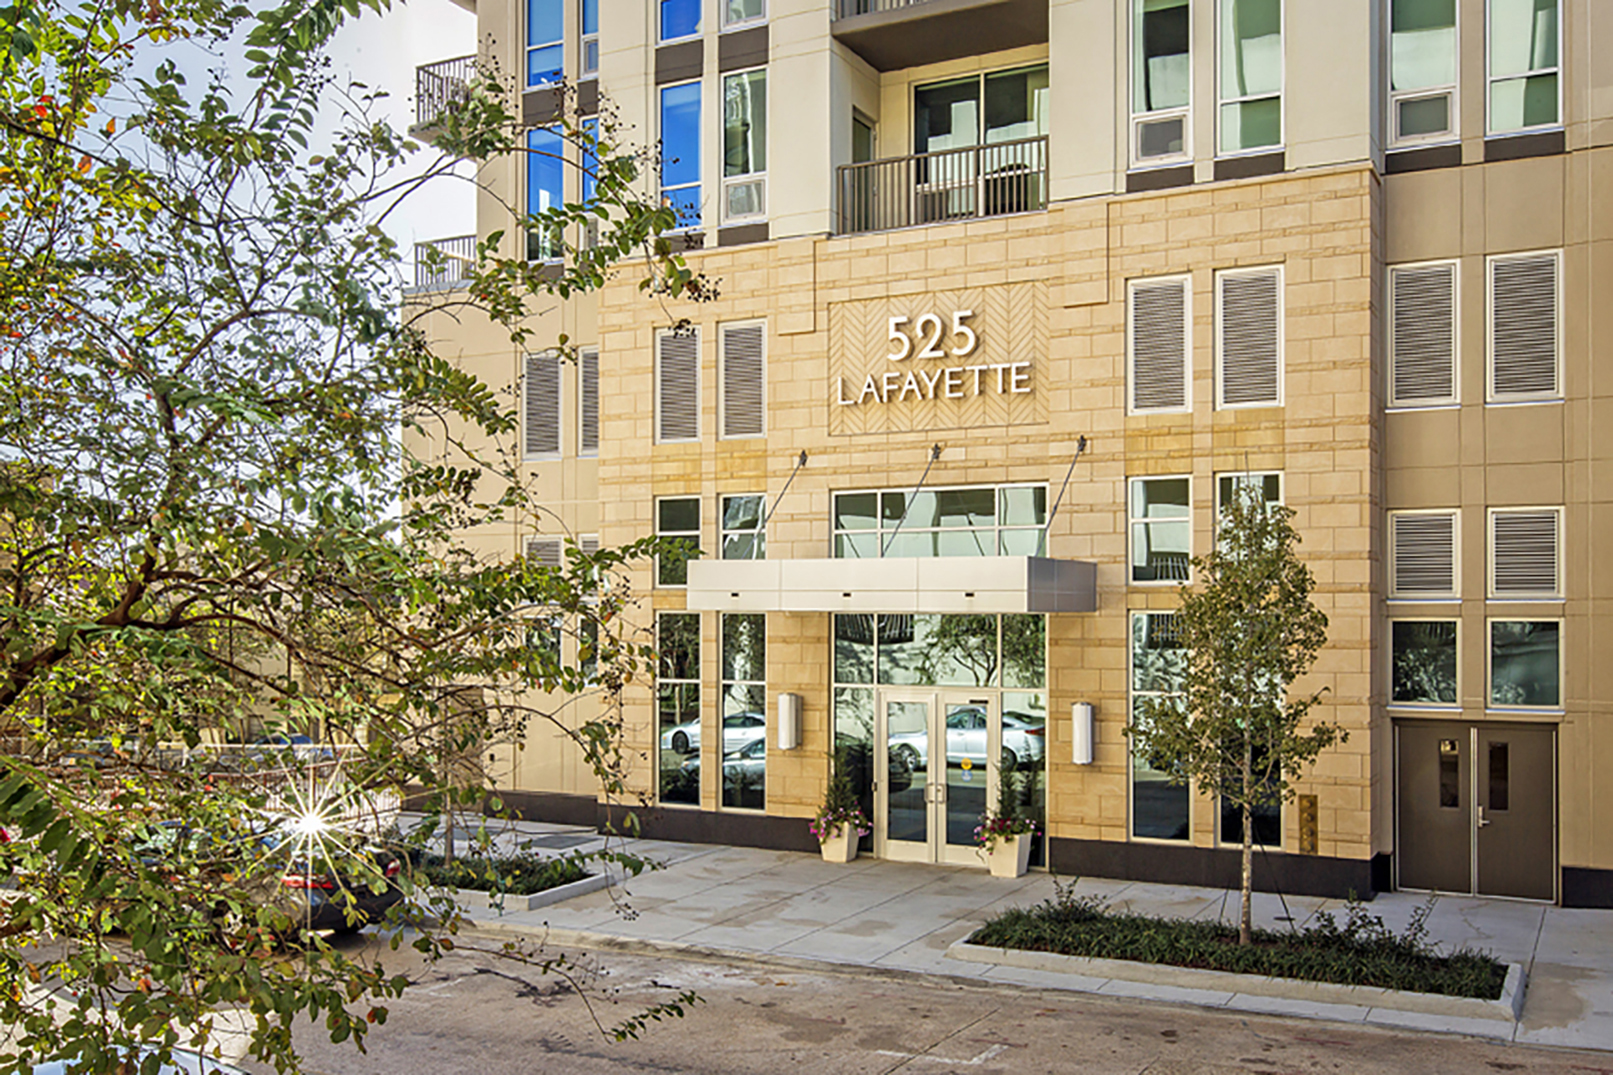 Luxury Apartments - Baton Rouge Business Report